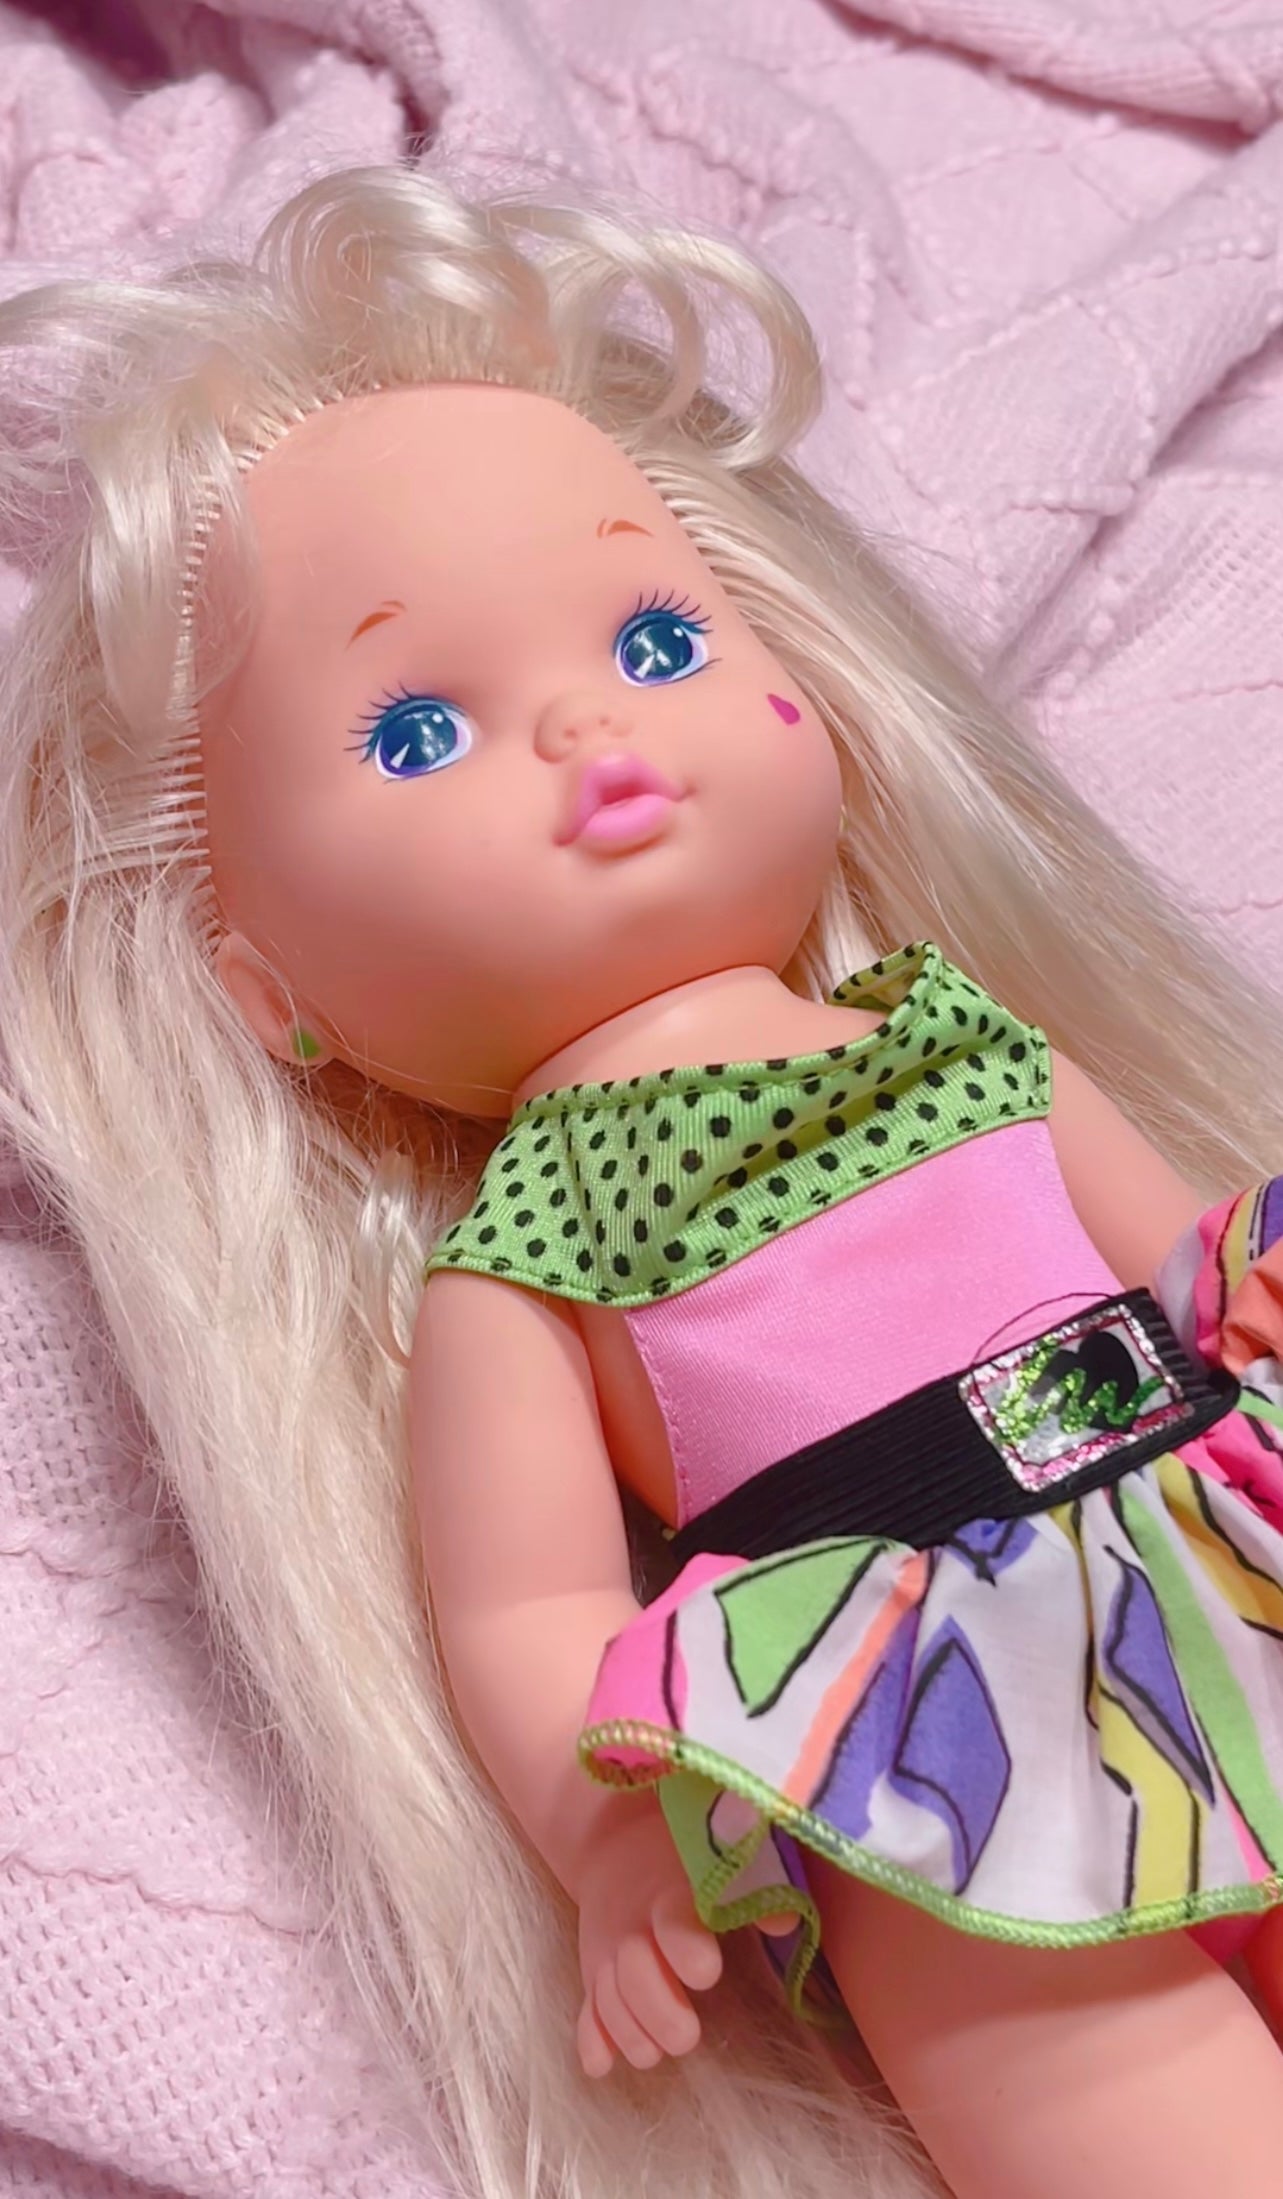 Lil Miss Magic Hair doll toy - 1988 - 13” tall